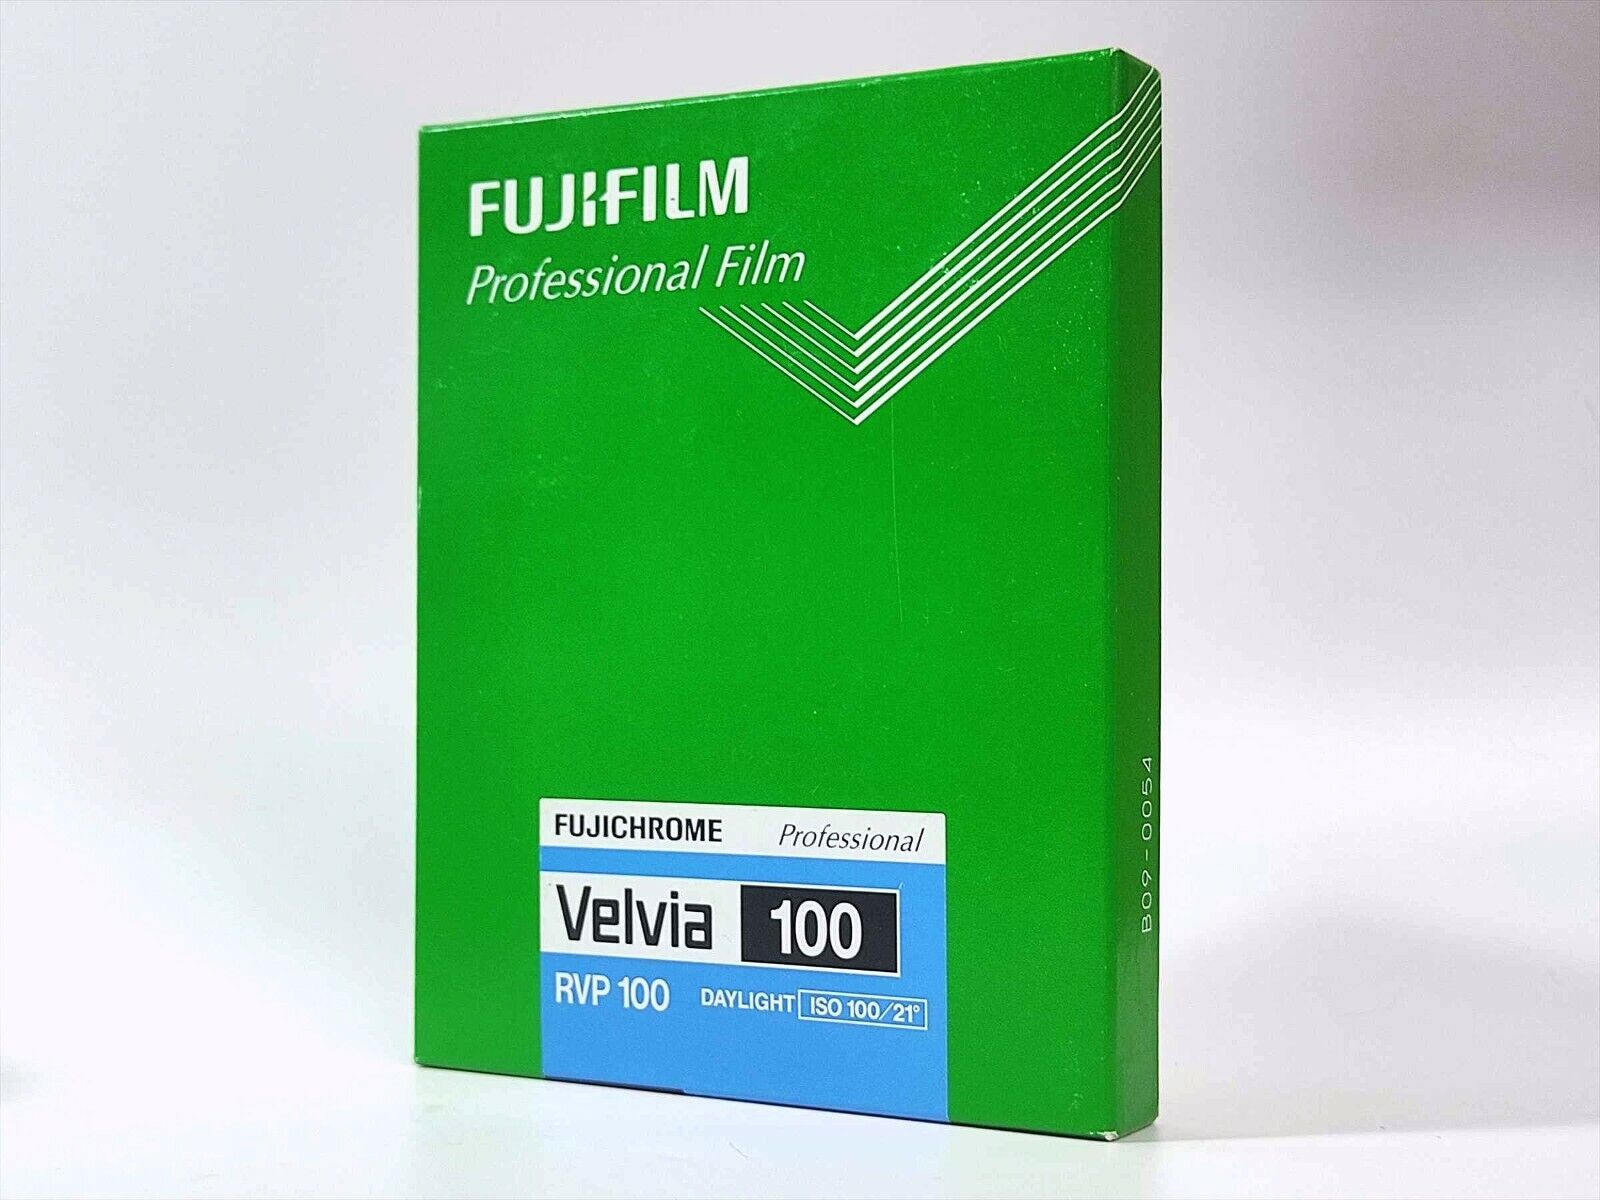 ［SEALED］FUJI FUJIFILM FUJICHROME Velvia 100 4x5 Film 20-Sheets Exp. 2018 #0248  